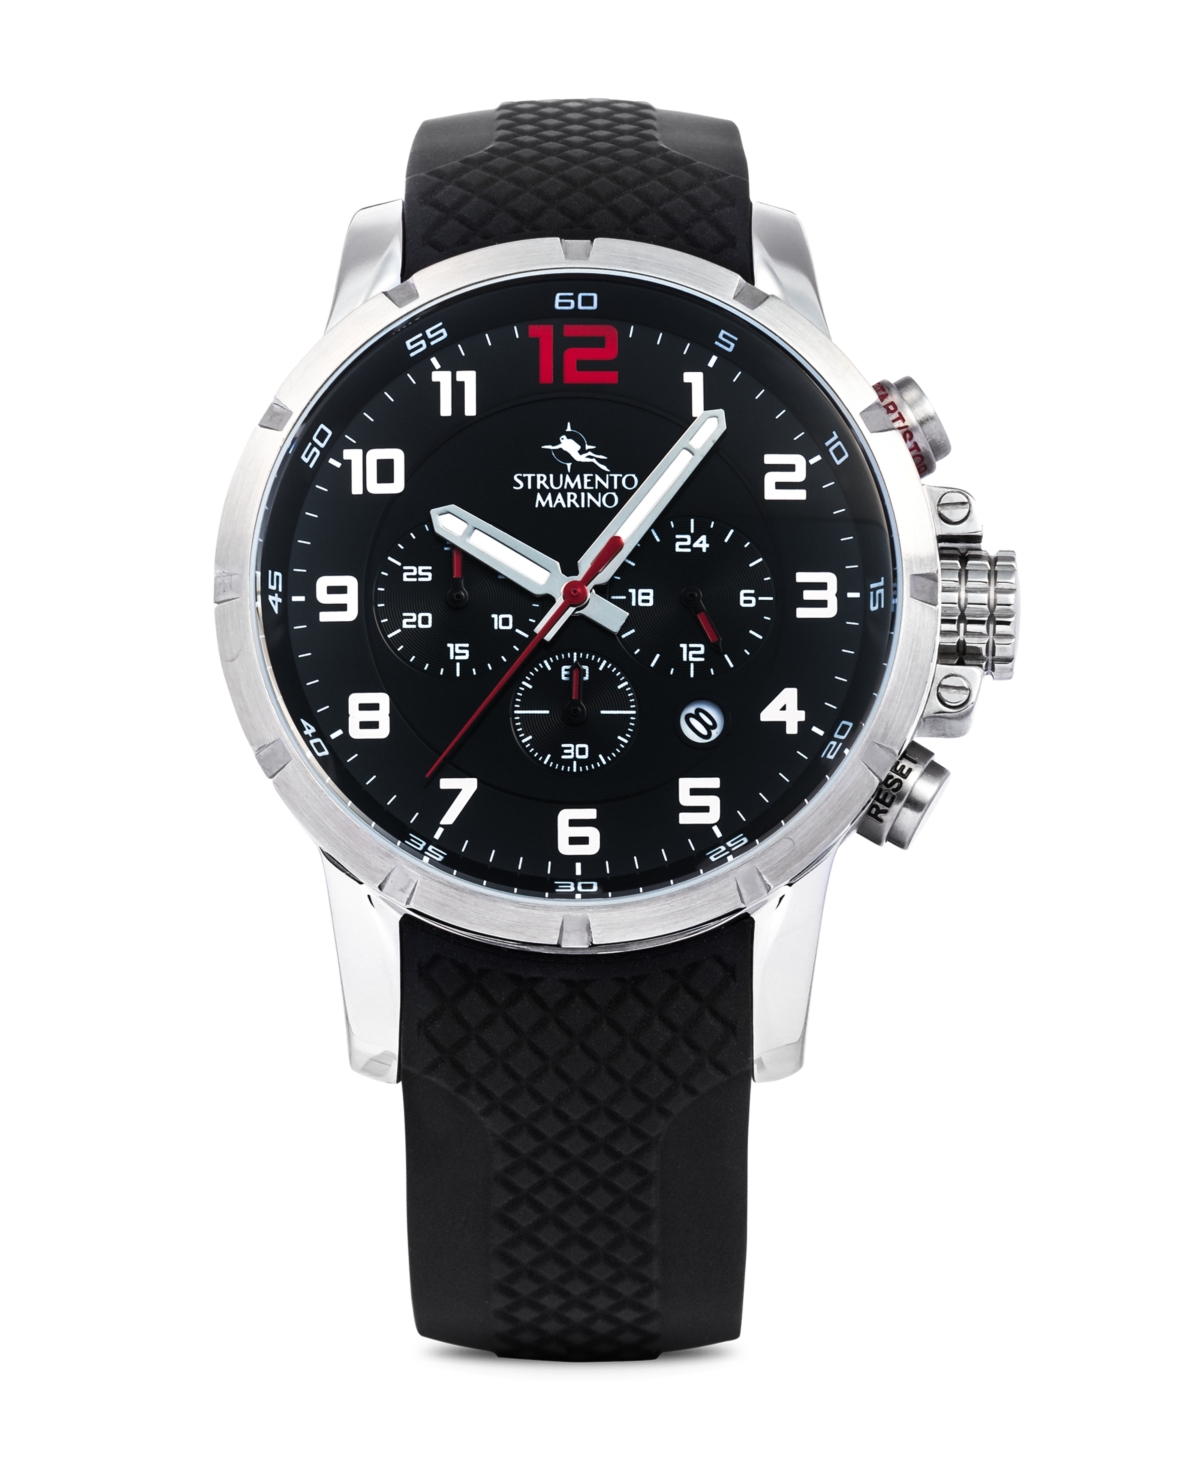 Strumento Marino Men's Summertime Black Silicone Performance Timepiece Watch 46mm